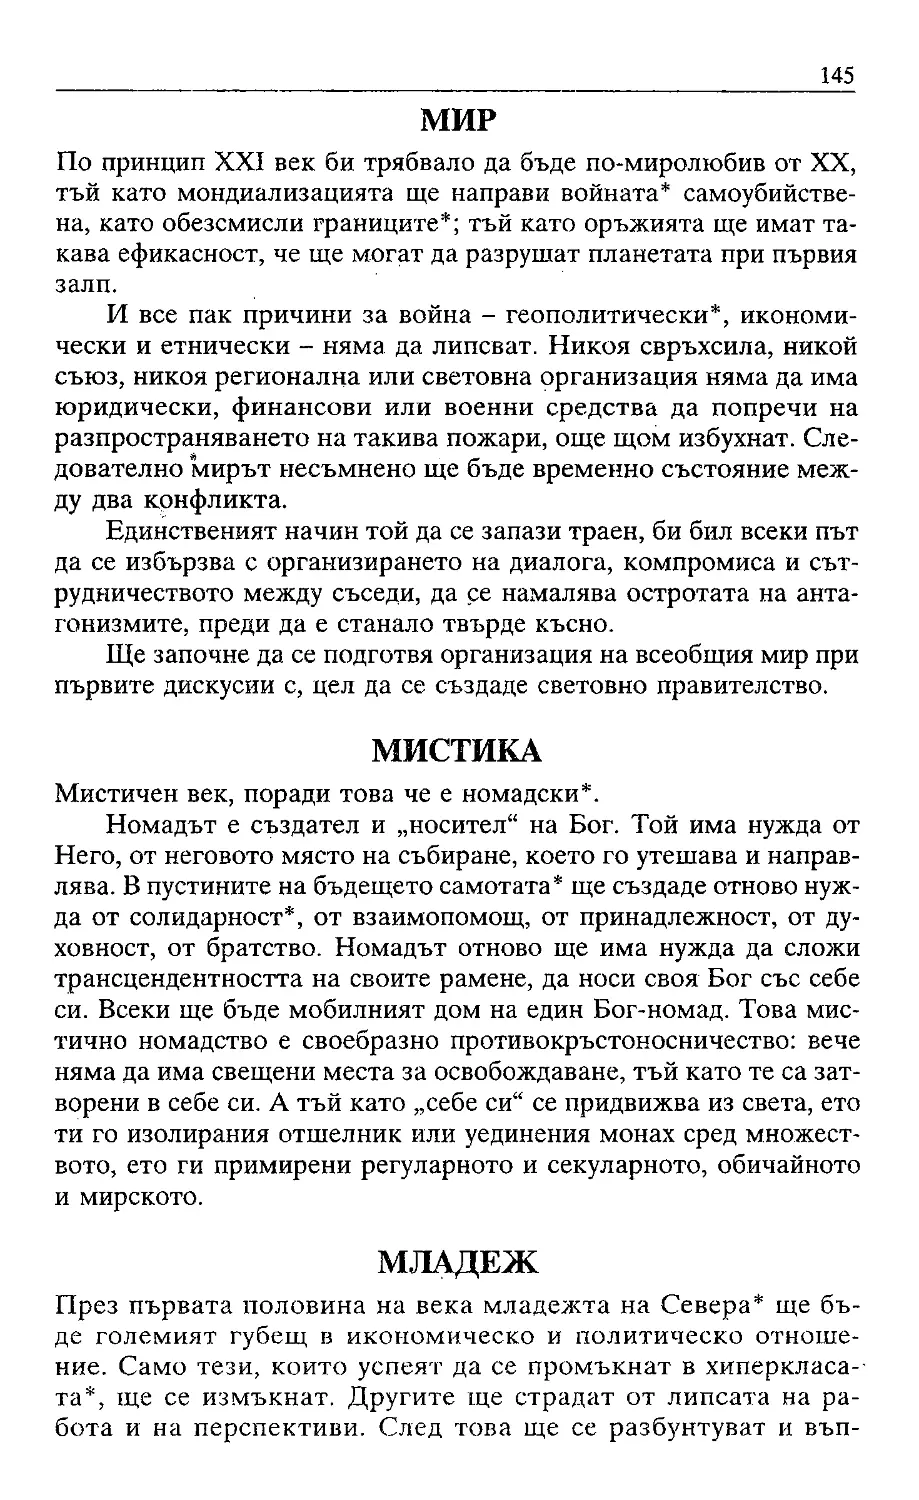 ﻿Жак Атали. Речник на 21 век_Page_071_Image_0001_2